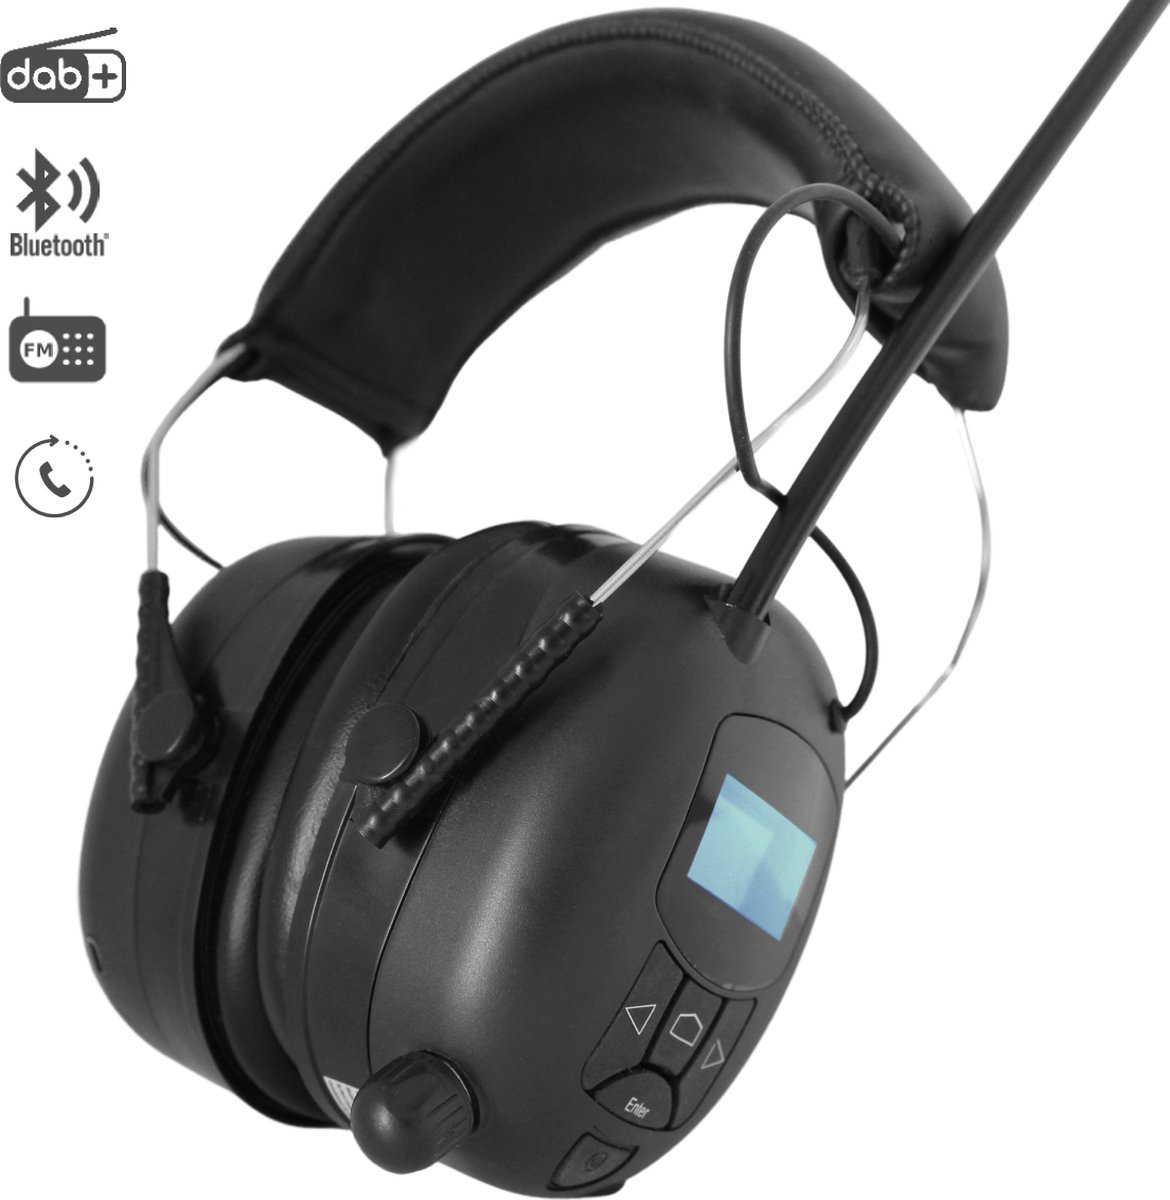 Gehoorbescherming met Radio - DAB+ - Oorbeschermers met Bluetooth en AUDIO ingang - Oplaadbaar - Inclusief Tas - EAR-20-D - Soul Taine